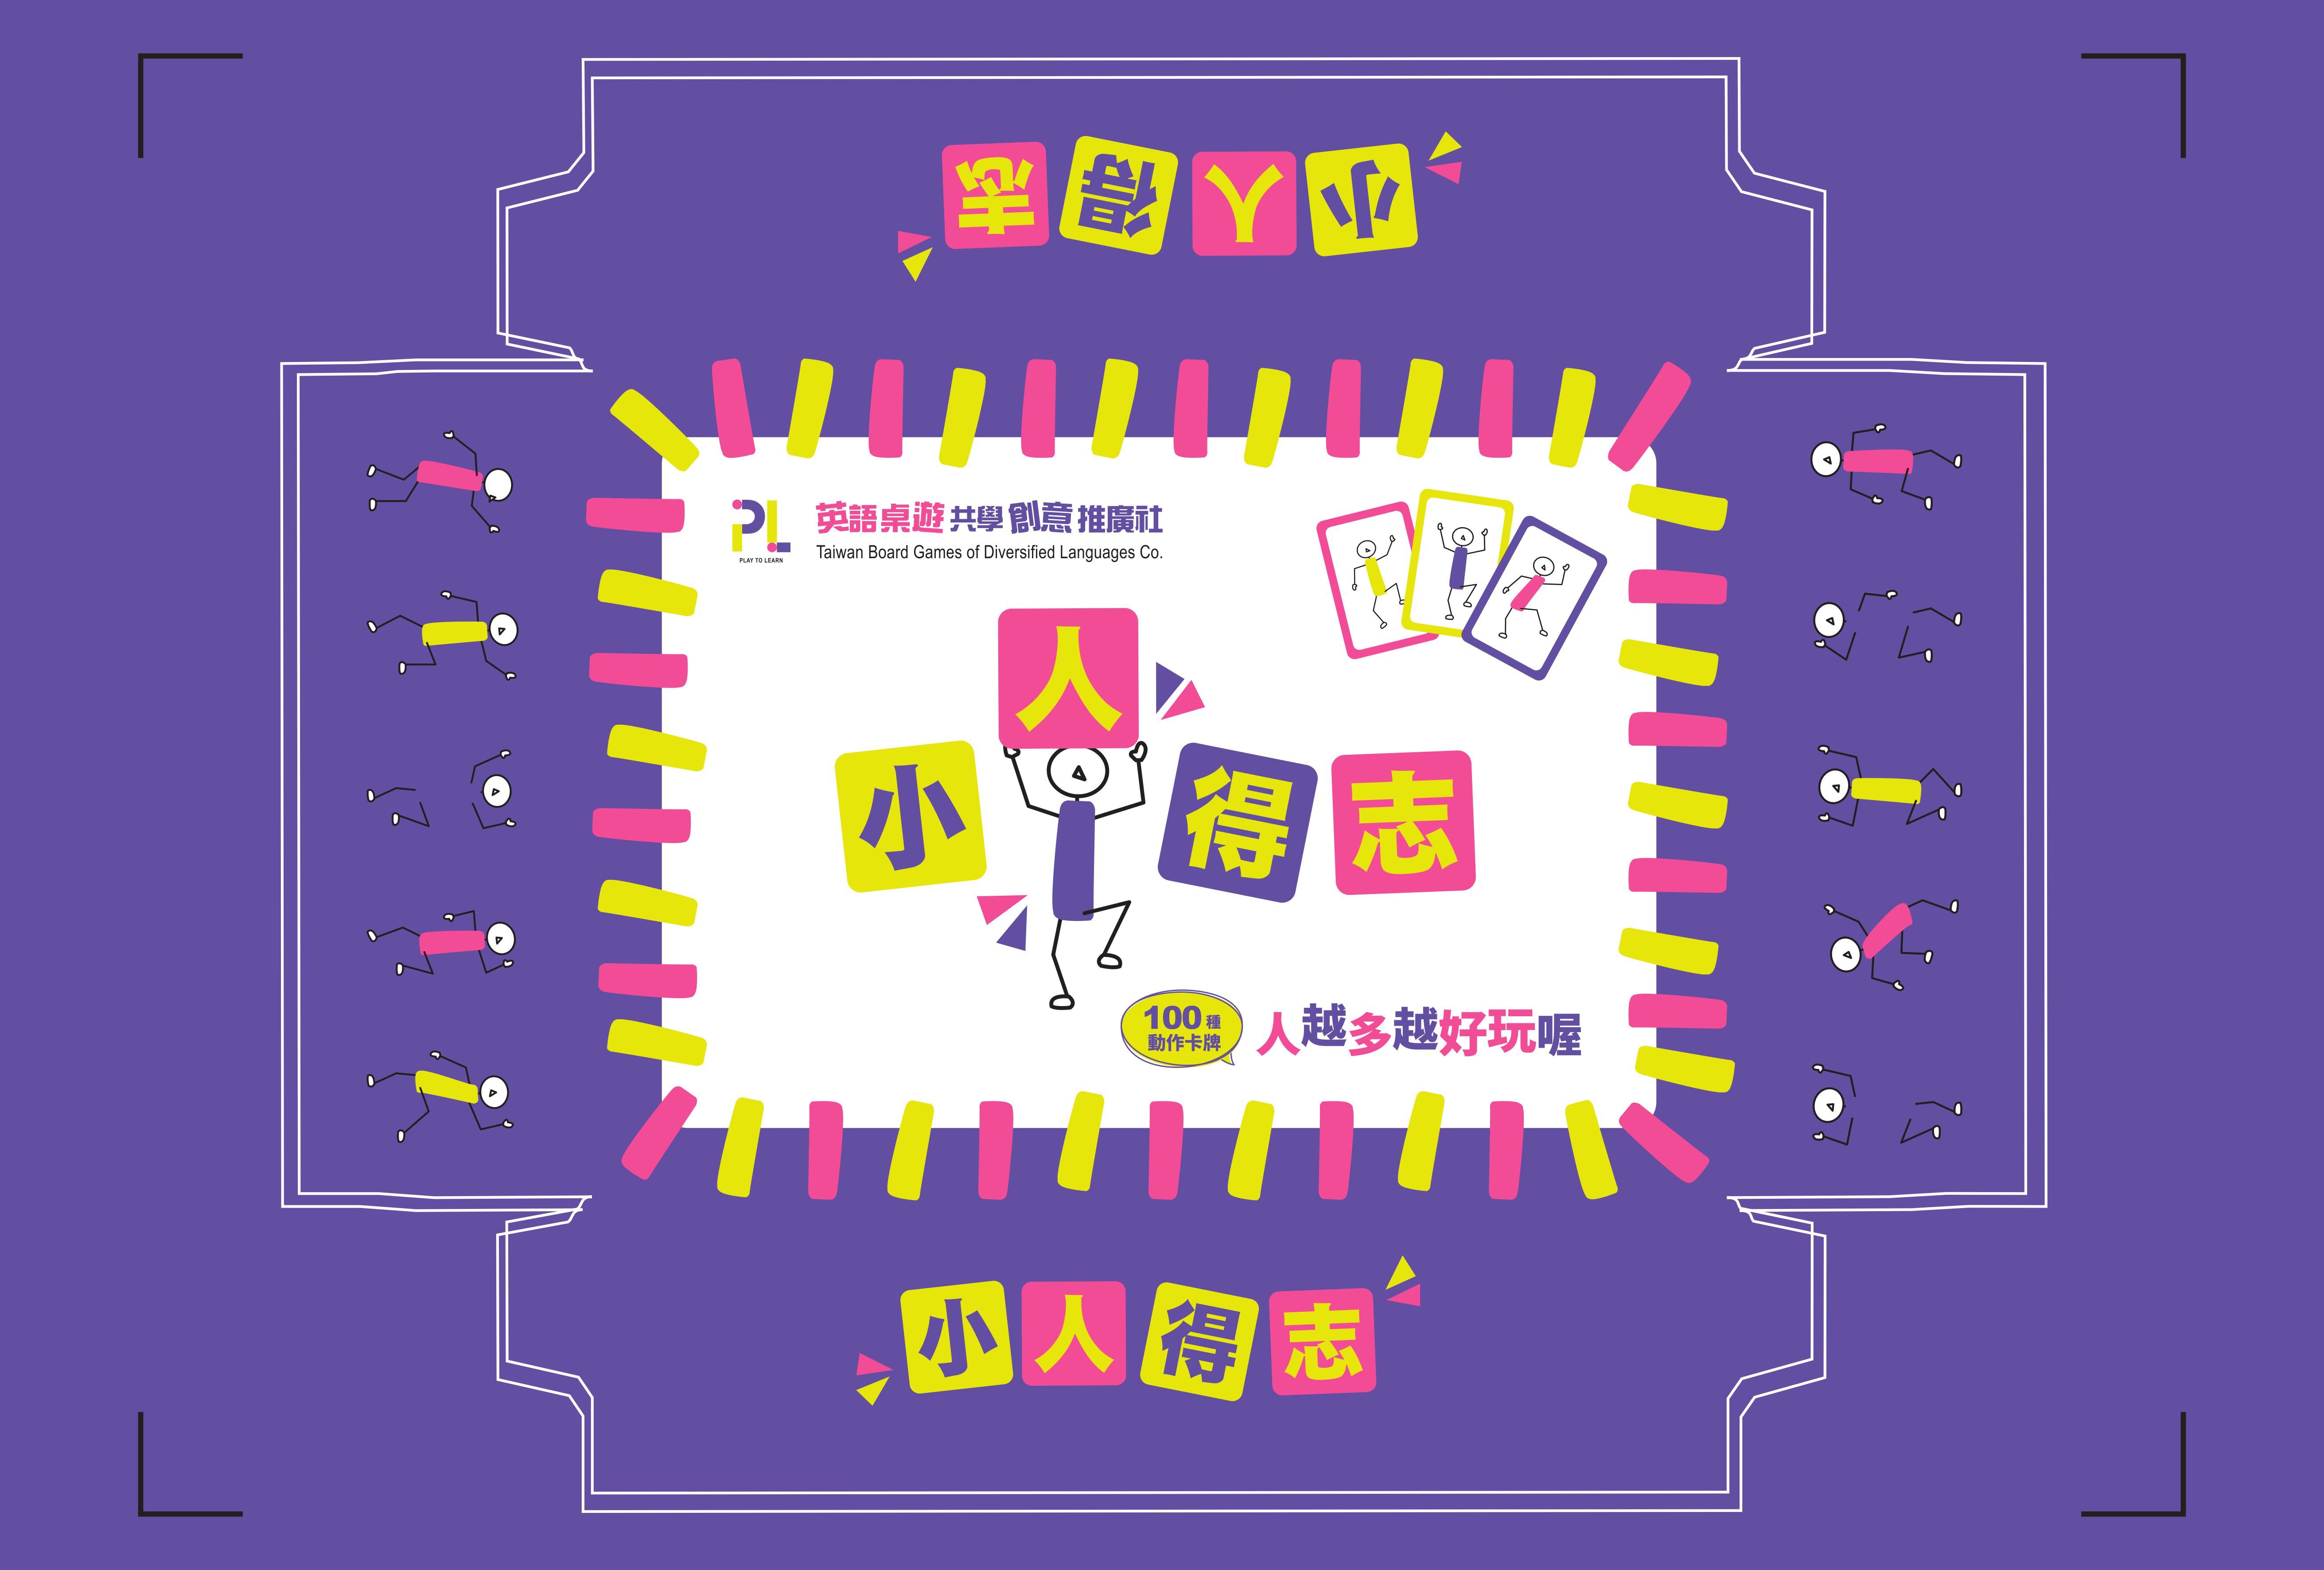 MUSE Design Winners - Board games made in Taiwan